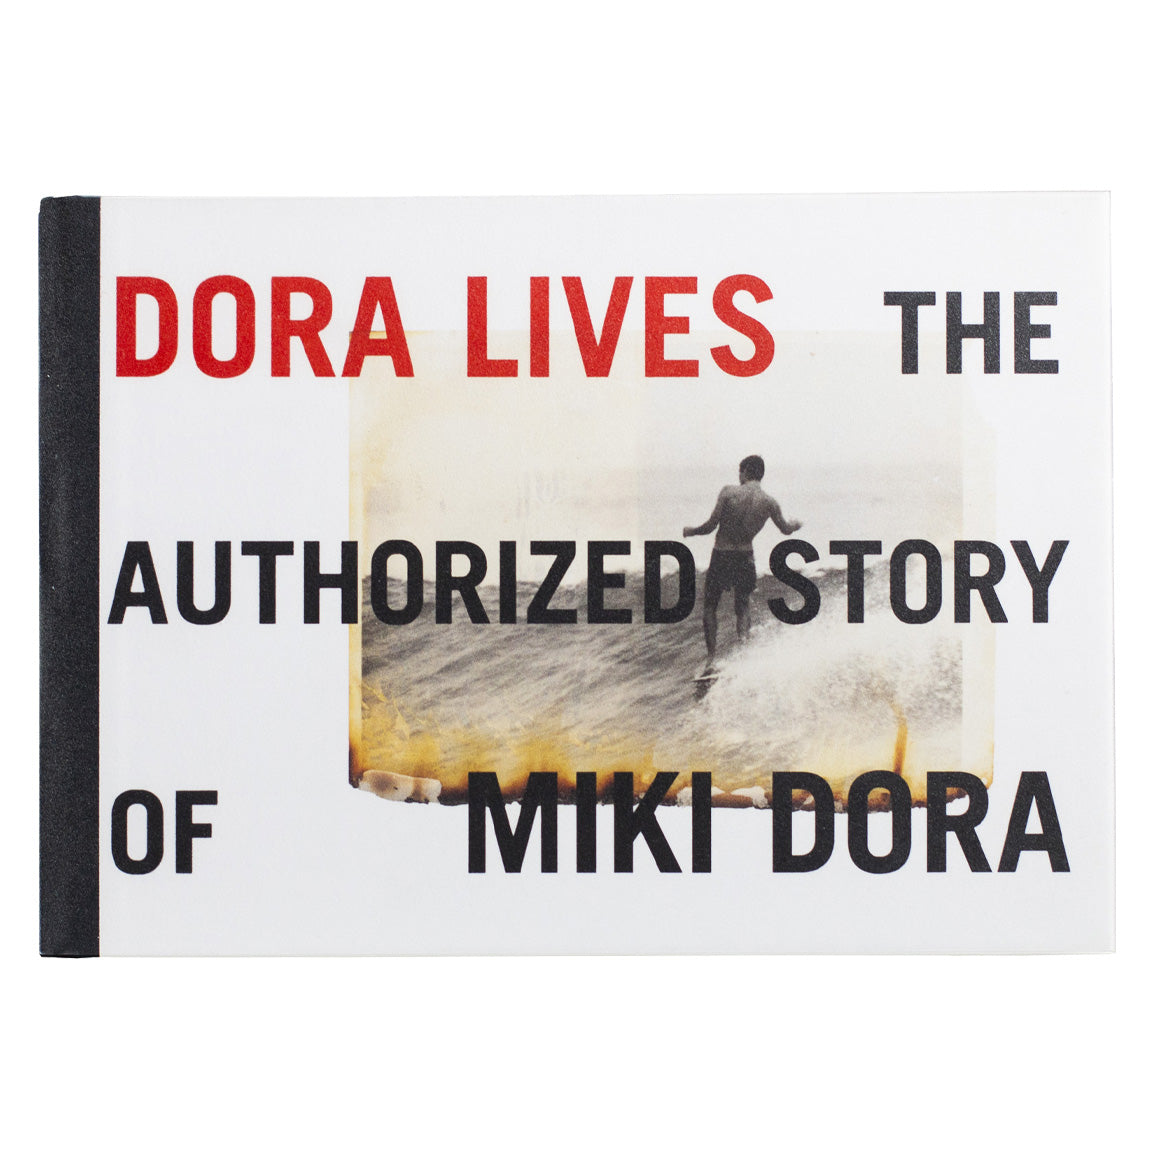 DORA LIVES: THEAUTHORIZED STORY OF MIKI DORA